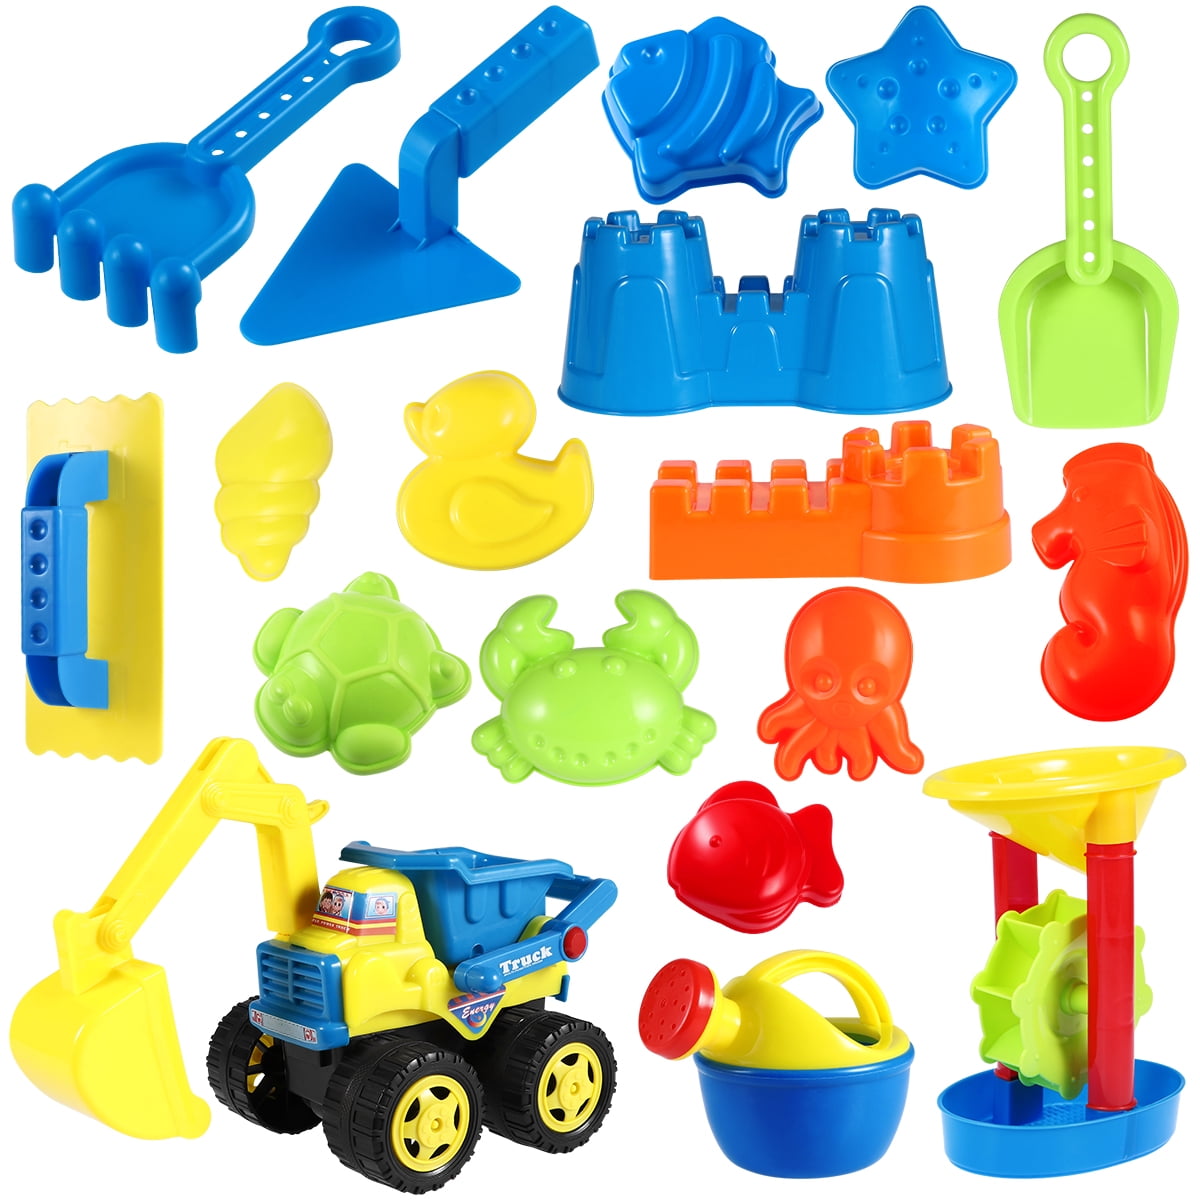 Toyvian Beach Sandbox Toys Plastic Castle Bucket Beach Game Toys for Kids 4pcs Random Color 